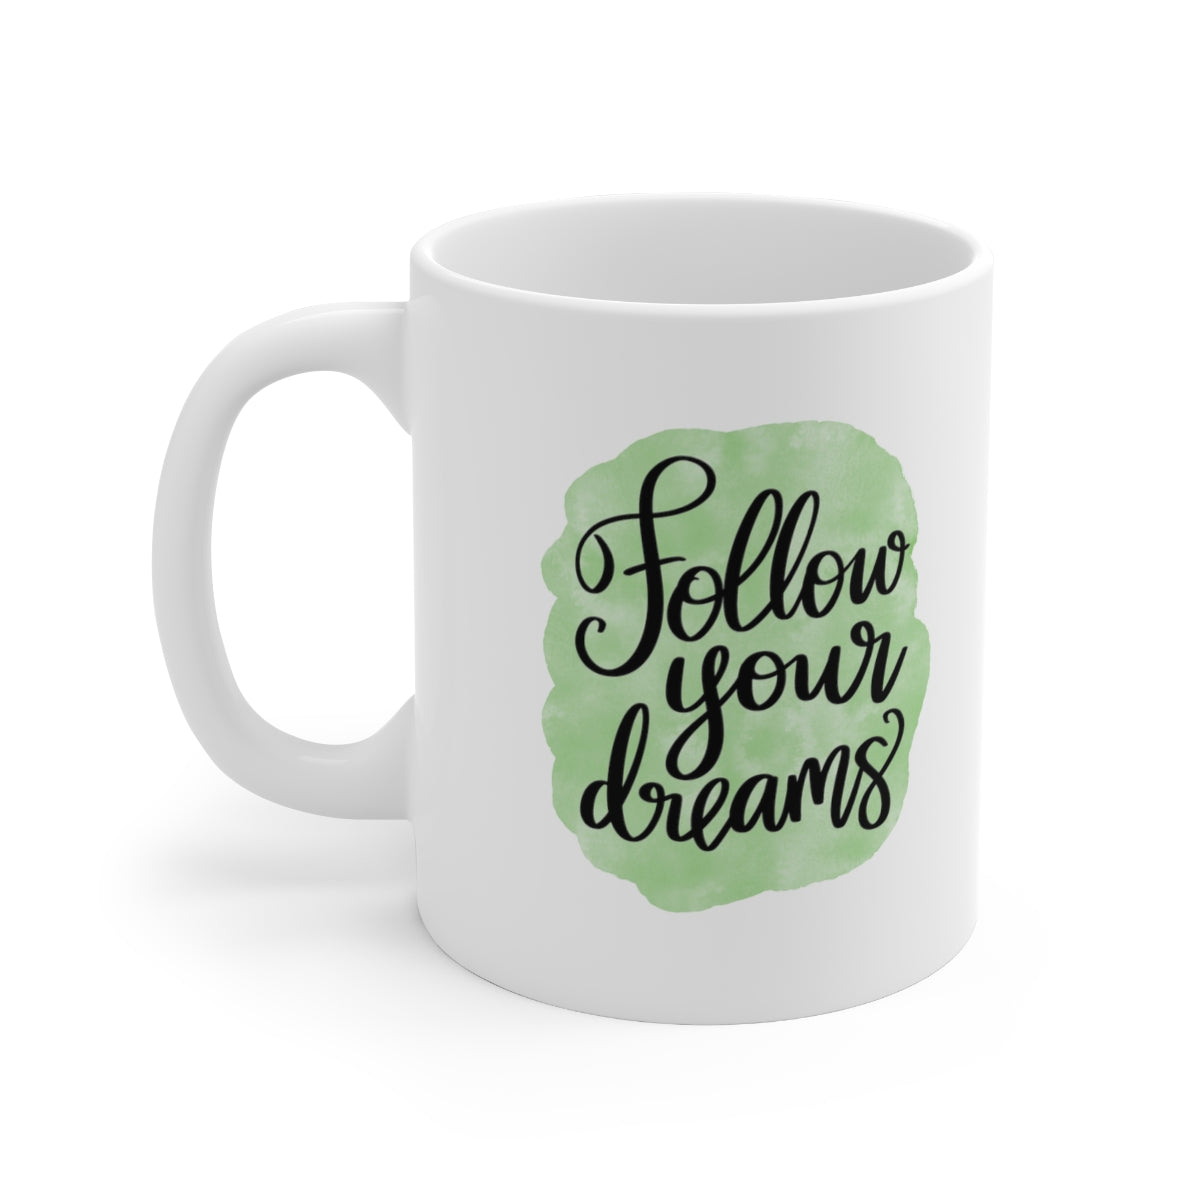 Follow Your Dreams Ceramic Mug